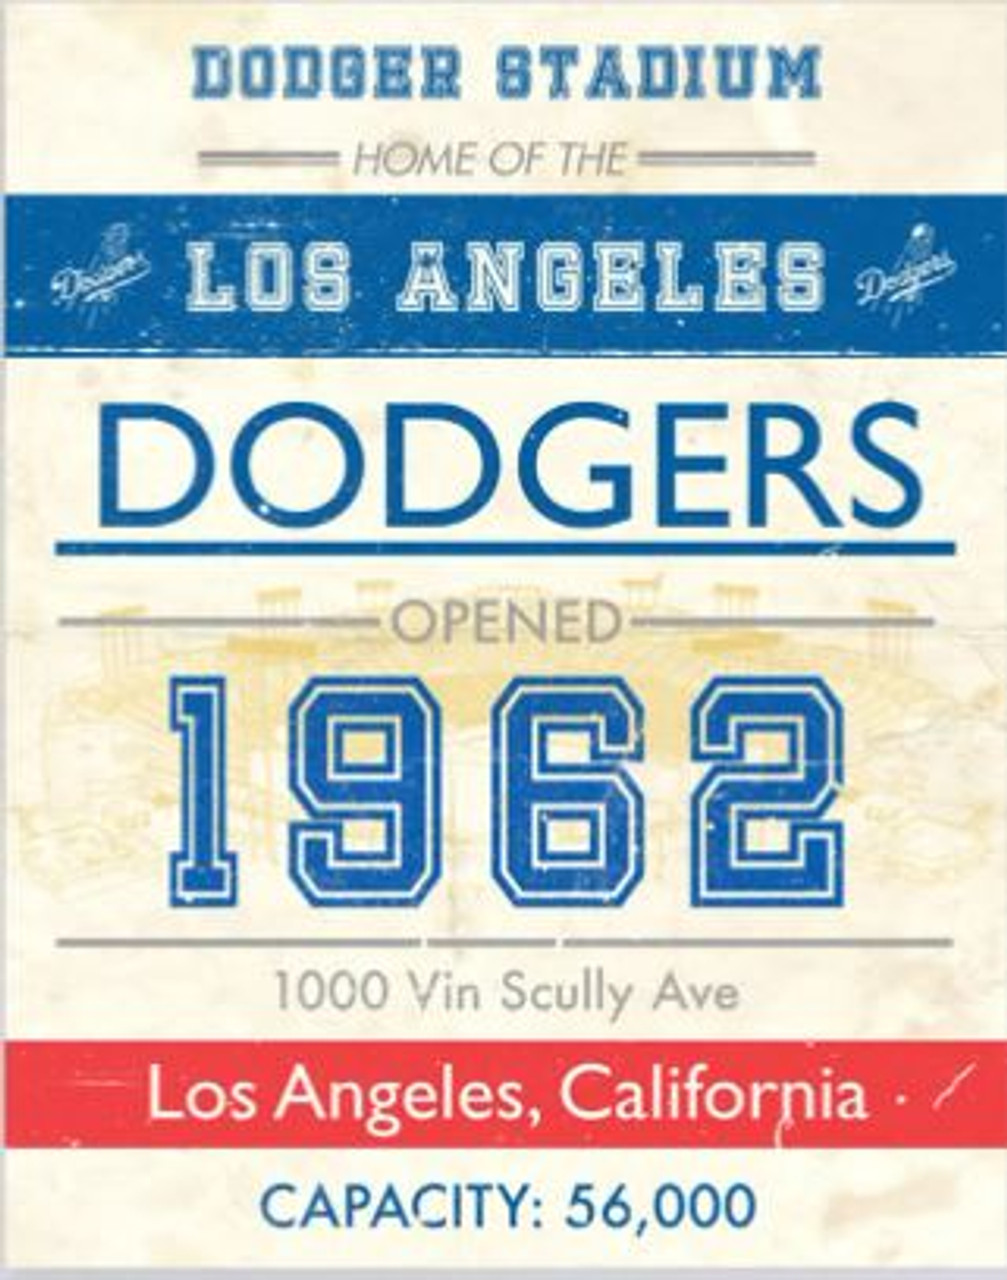 LA Dodgers Vintage Replica MLB Jersey